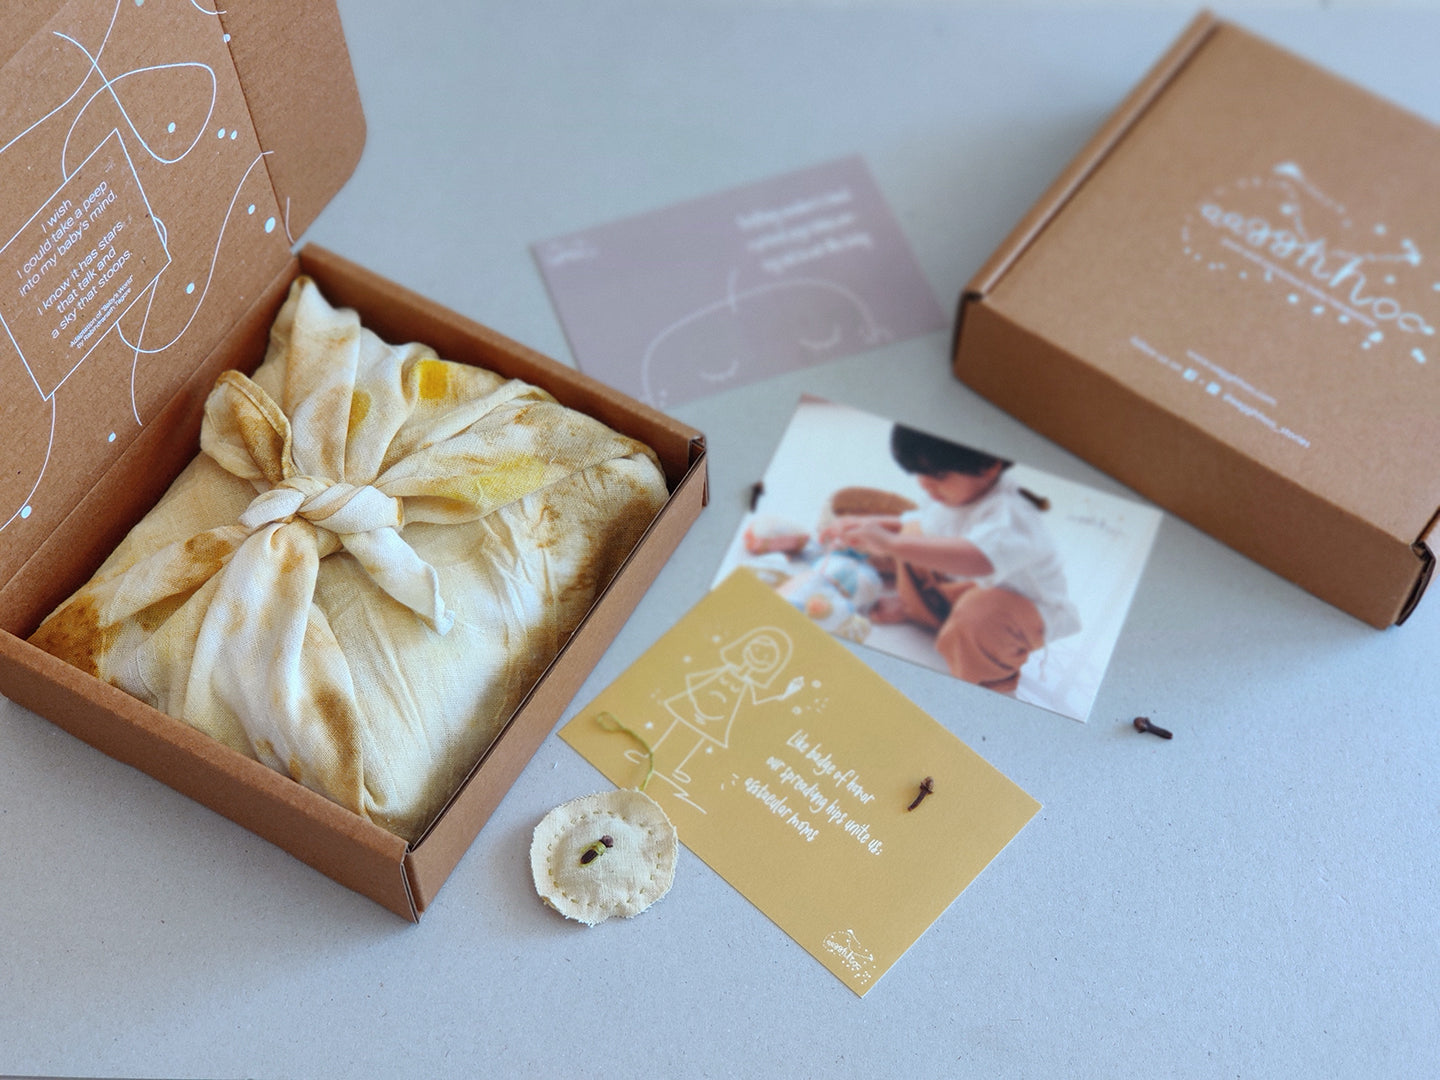 Flutter Blobs - Organic & Natural Dye - Newborn Baby Homecoming Gift Bundle - Set of 5